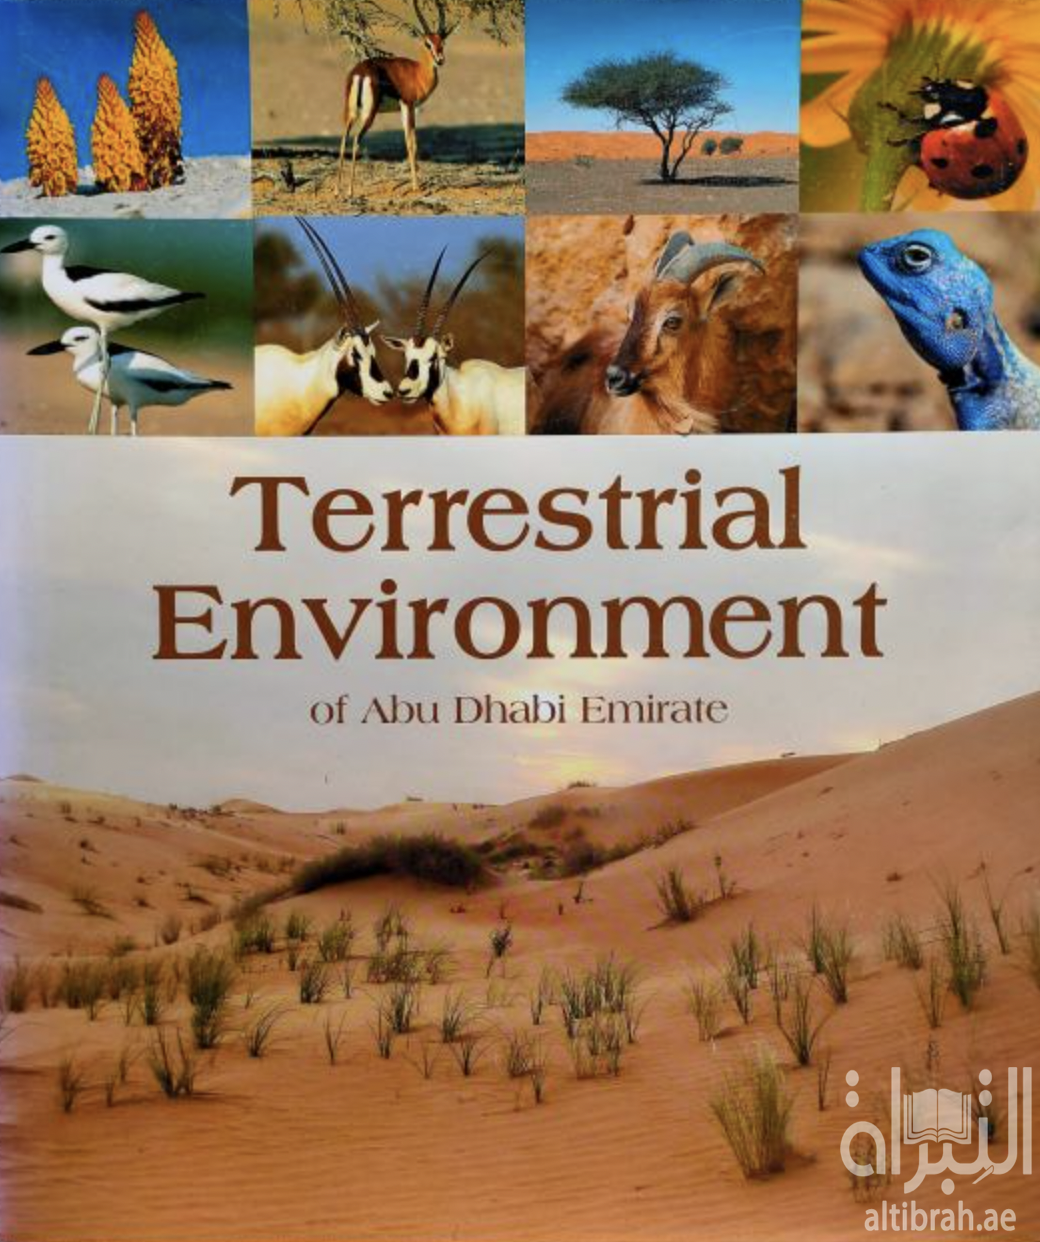 Terrestrial environment of Abu Dhabi Emirate